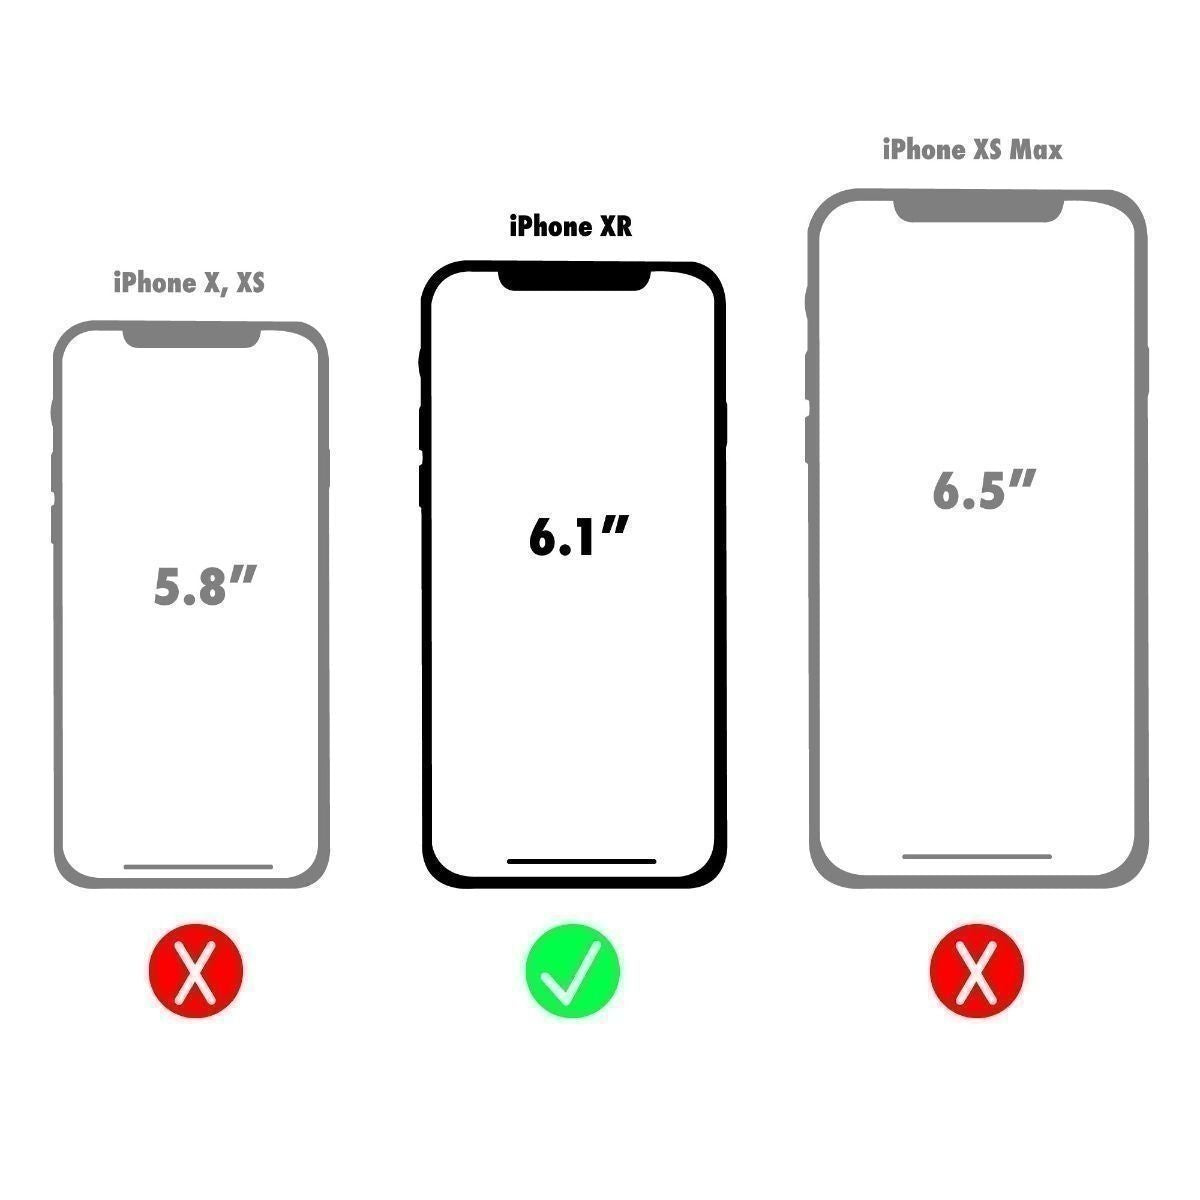 Apple iPhone XR Smartphone (A1984) Verizon Locked - 64GB / White Cell Phones & Smartphones Apple    - Simple Cell Bulk Wholesale Pricing - USA Seller